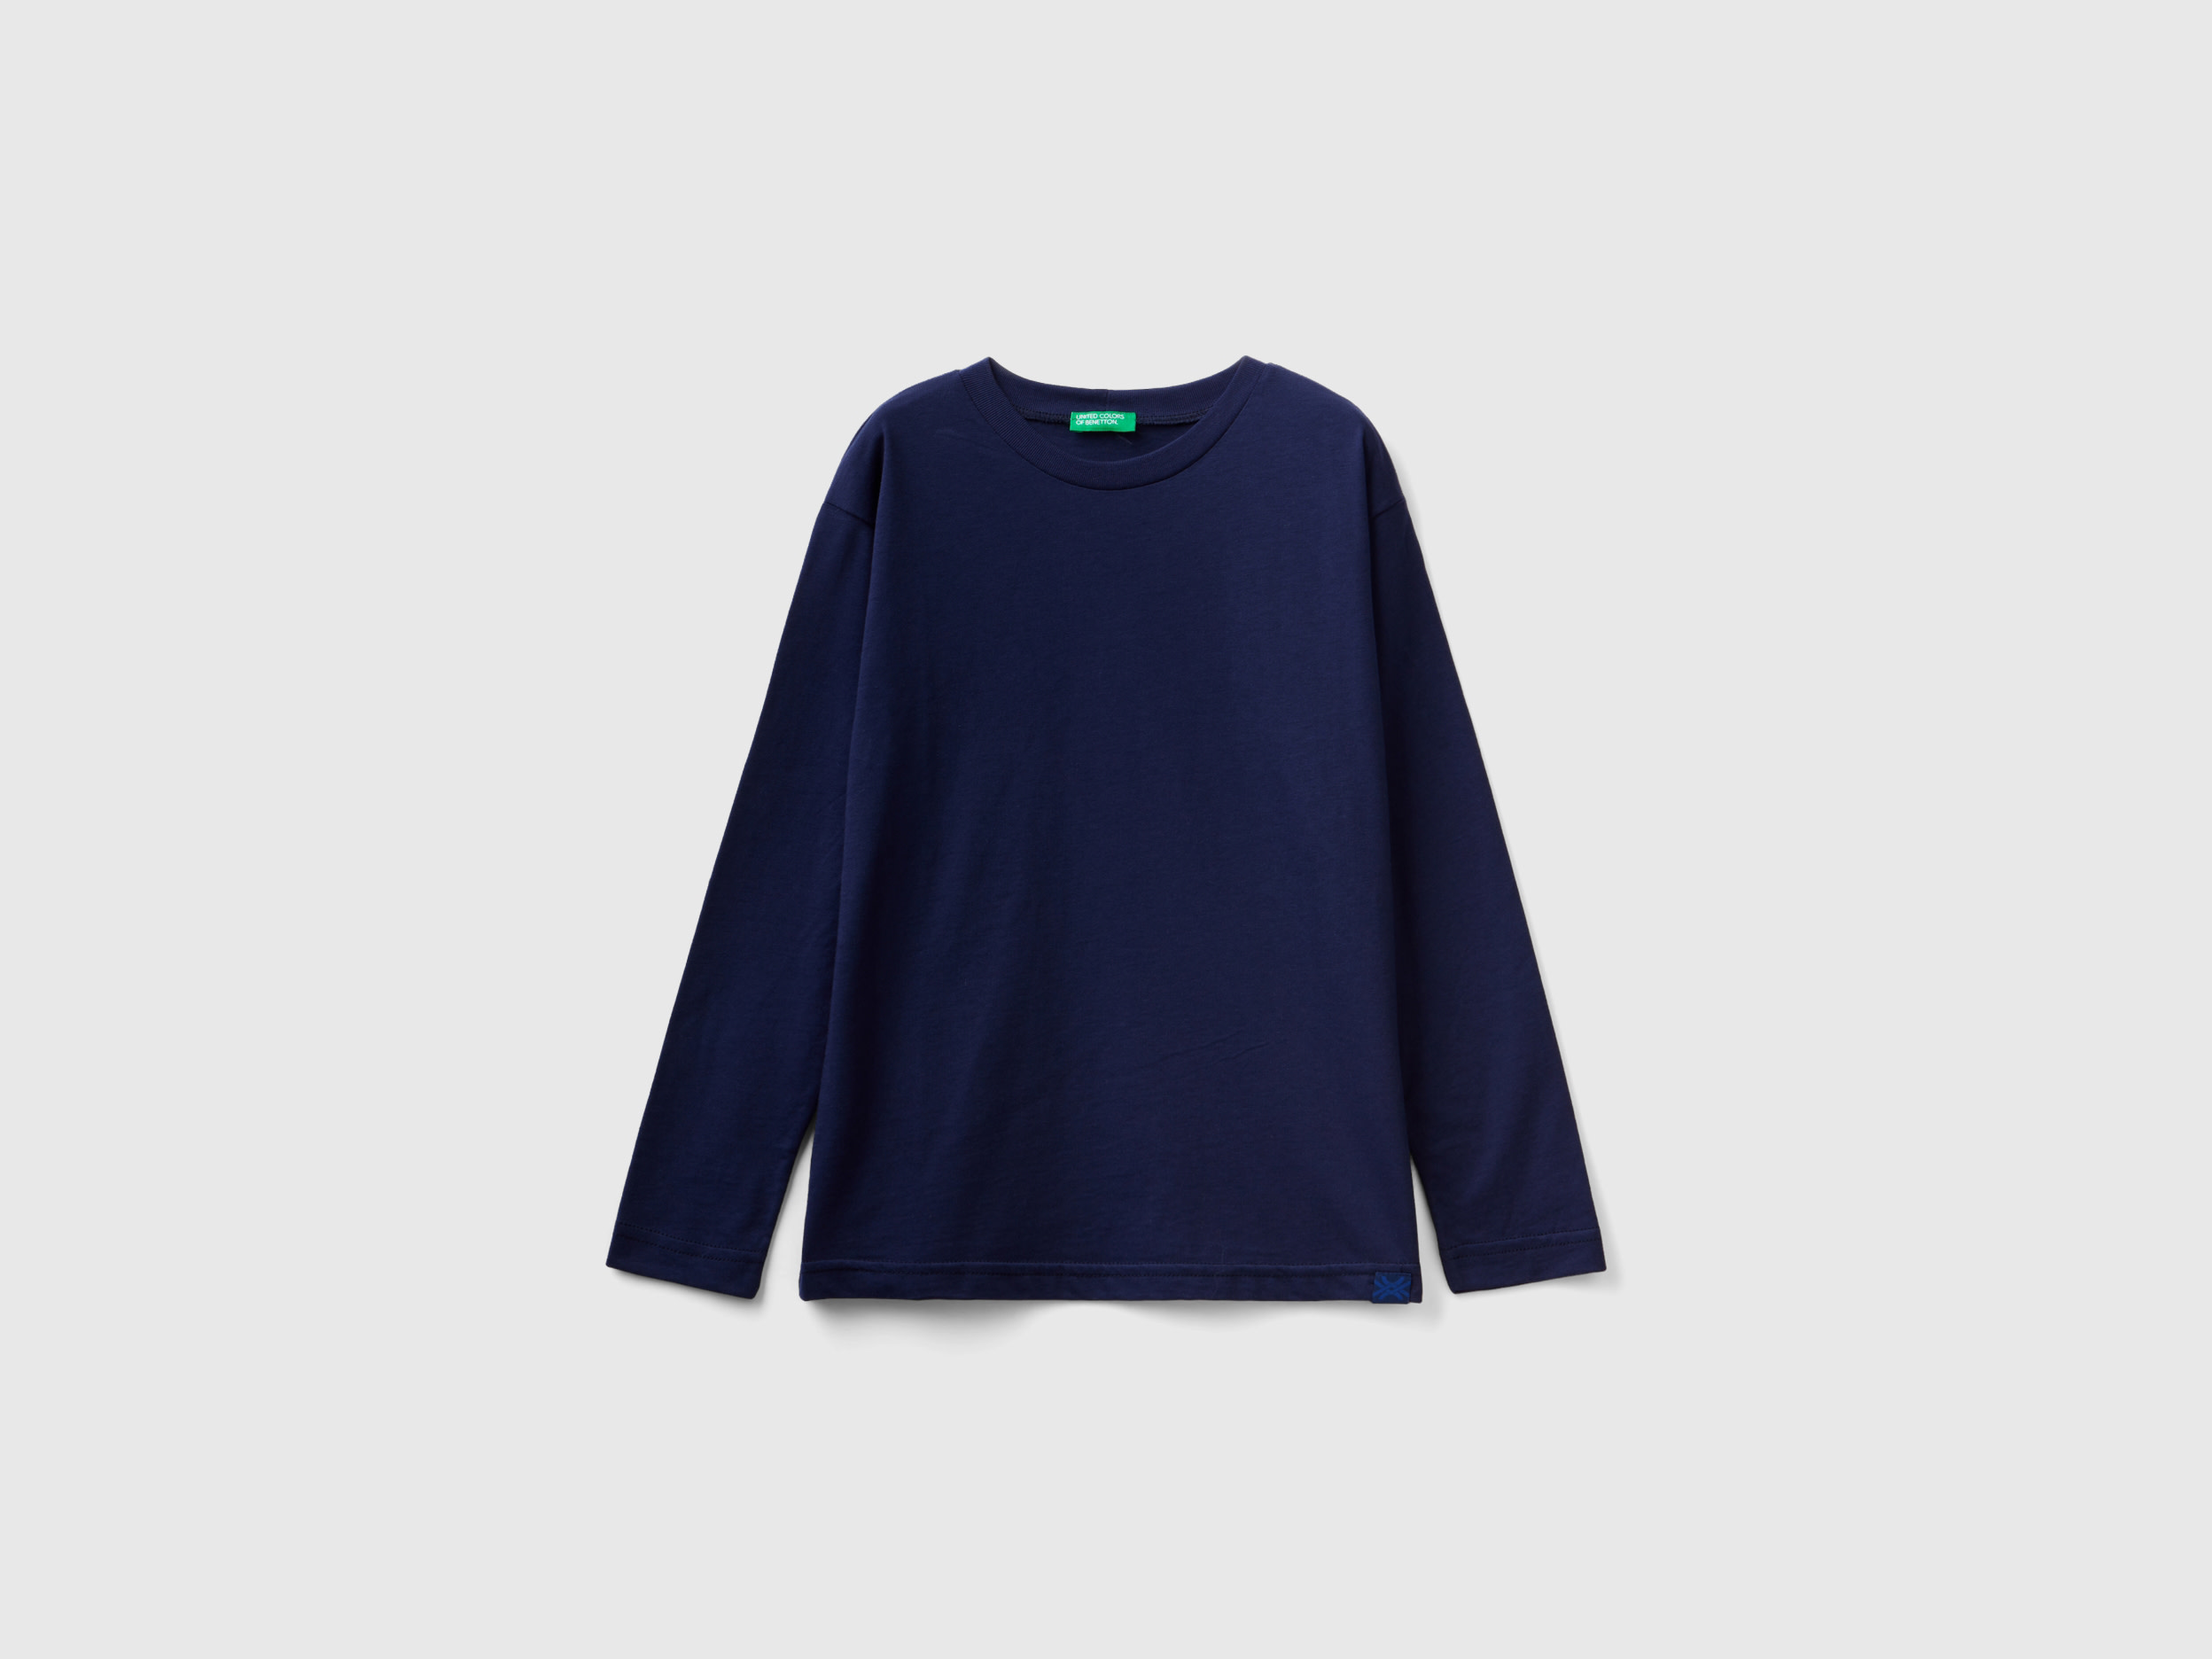 Image of Benetton, 100% Organic Cotton Crew Neck T-shirt, size 3XL, Dark Blue, Kids